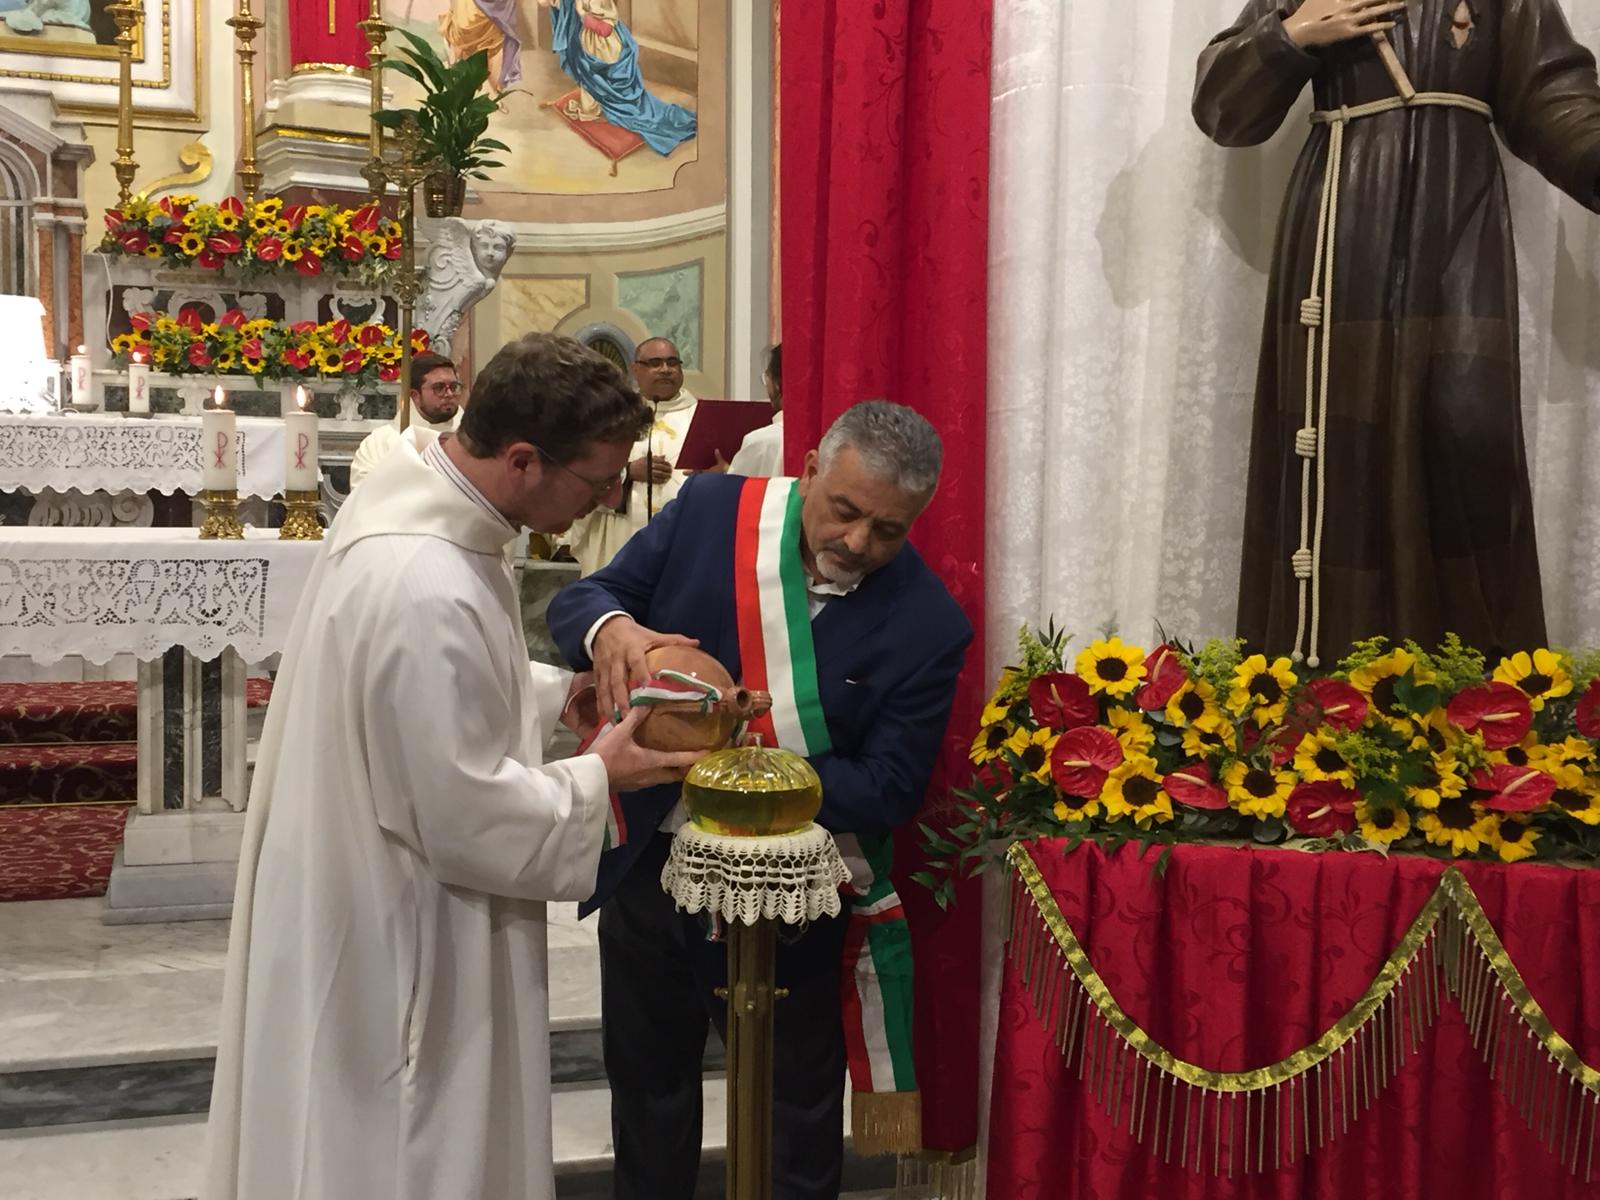 Airola| Lampada San Francesco, sindaco Matera: prendiamo esempio da questo Santo